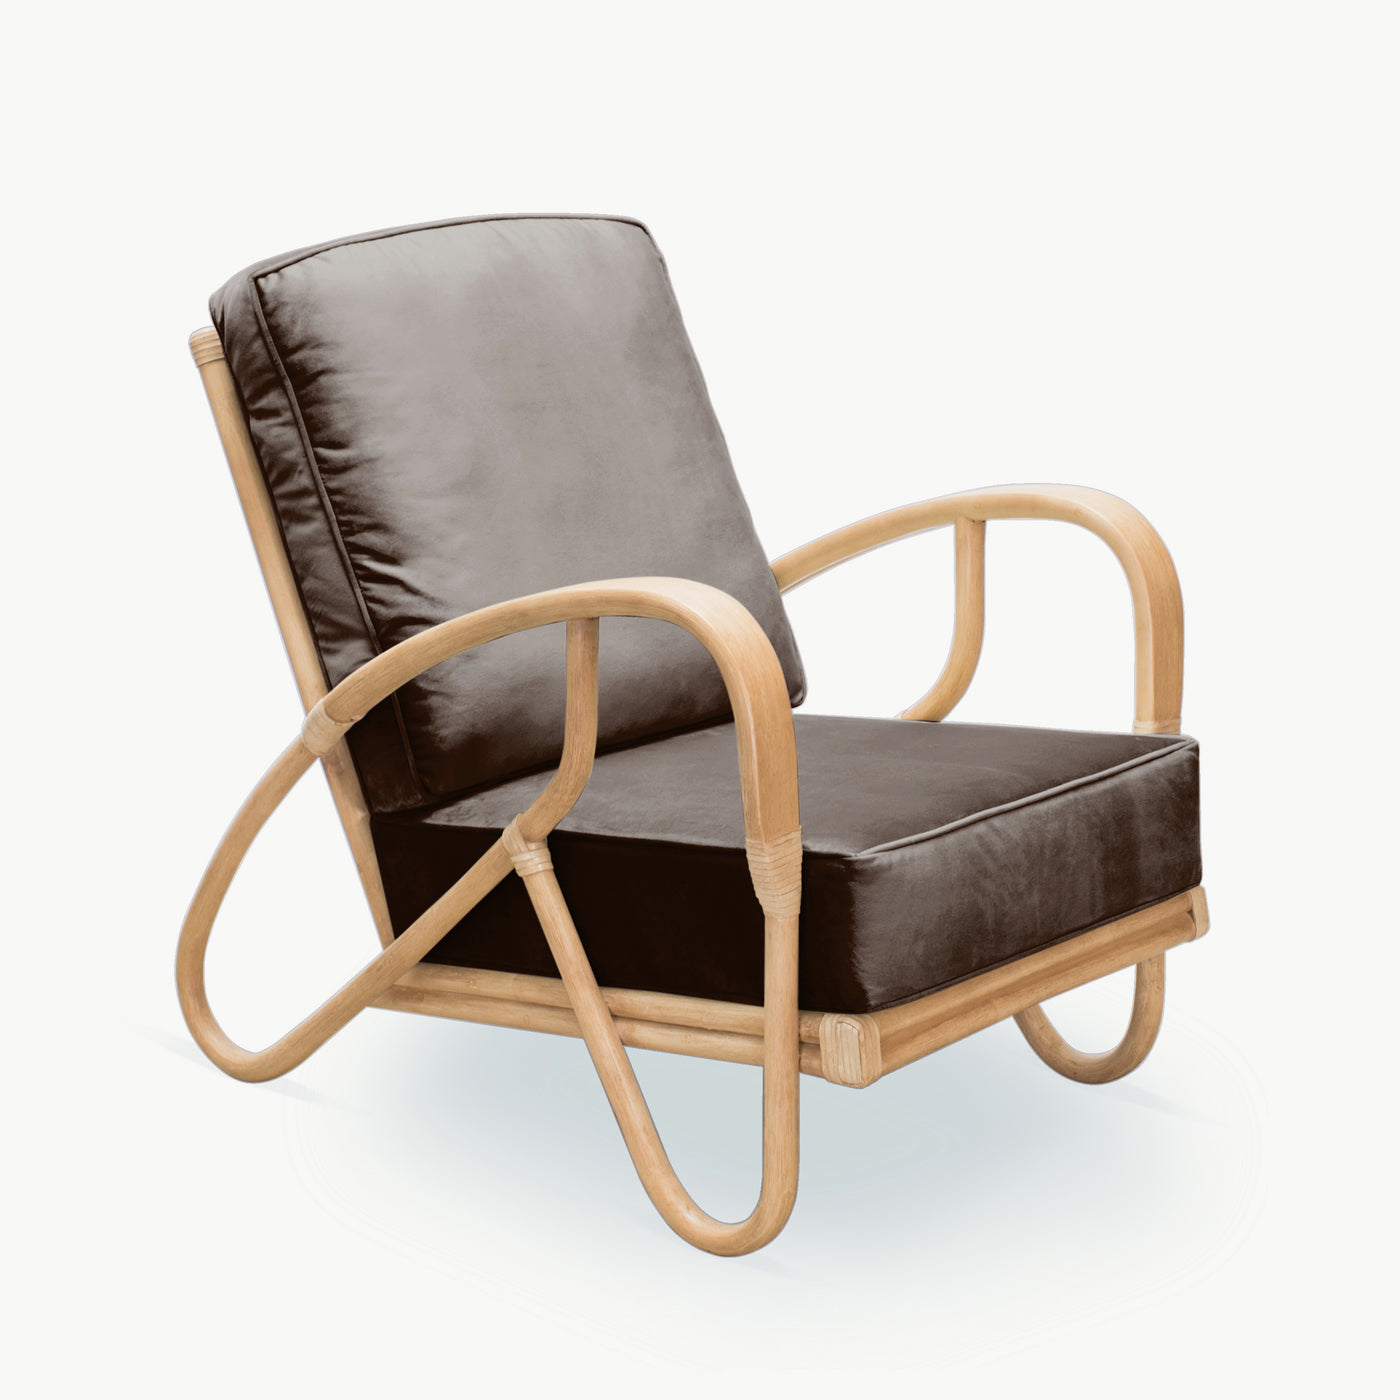 THE MAVERICK Cane Chair - Hickory